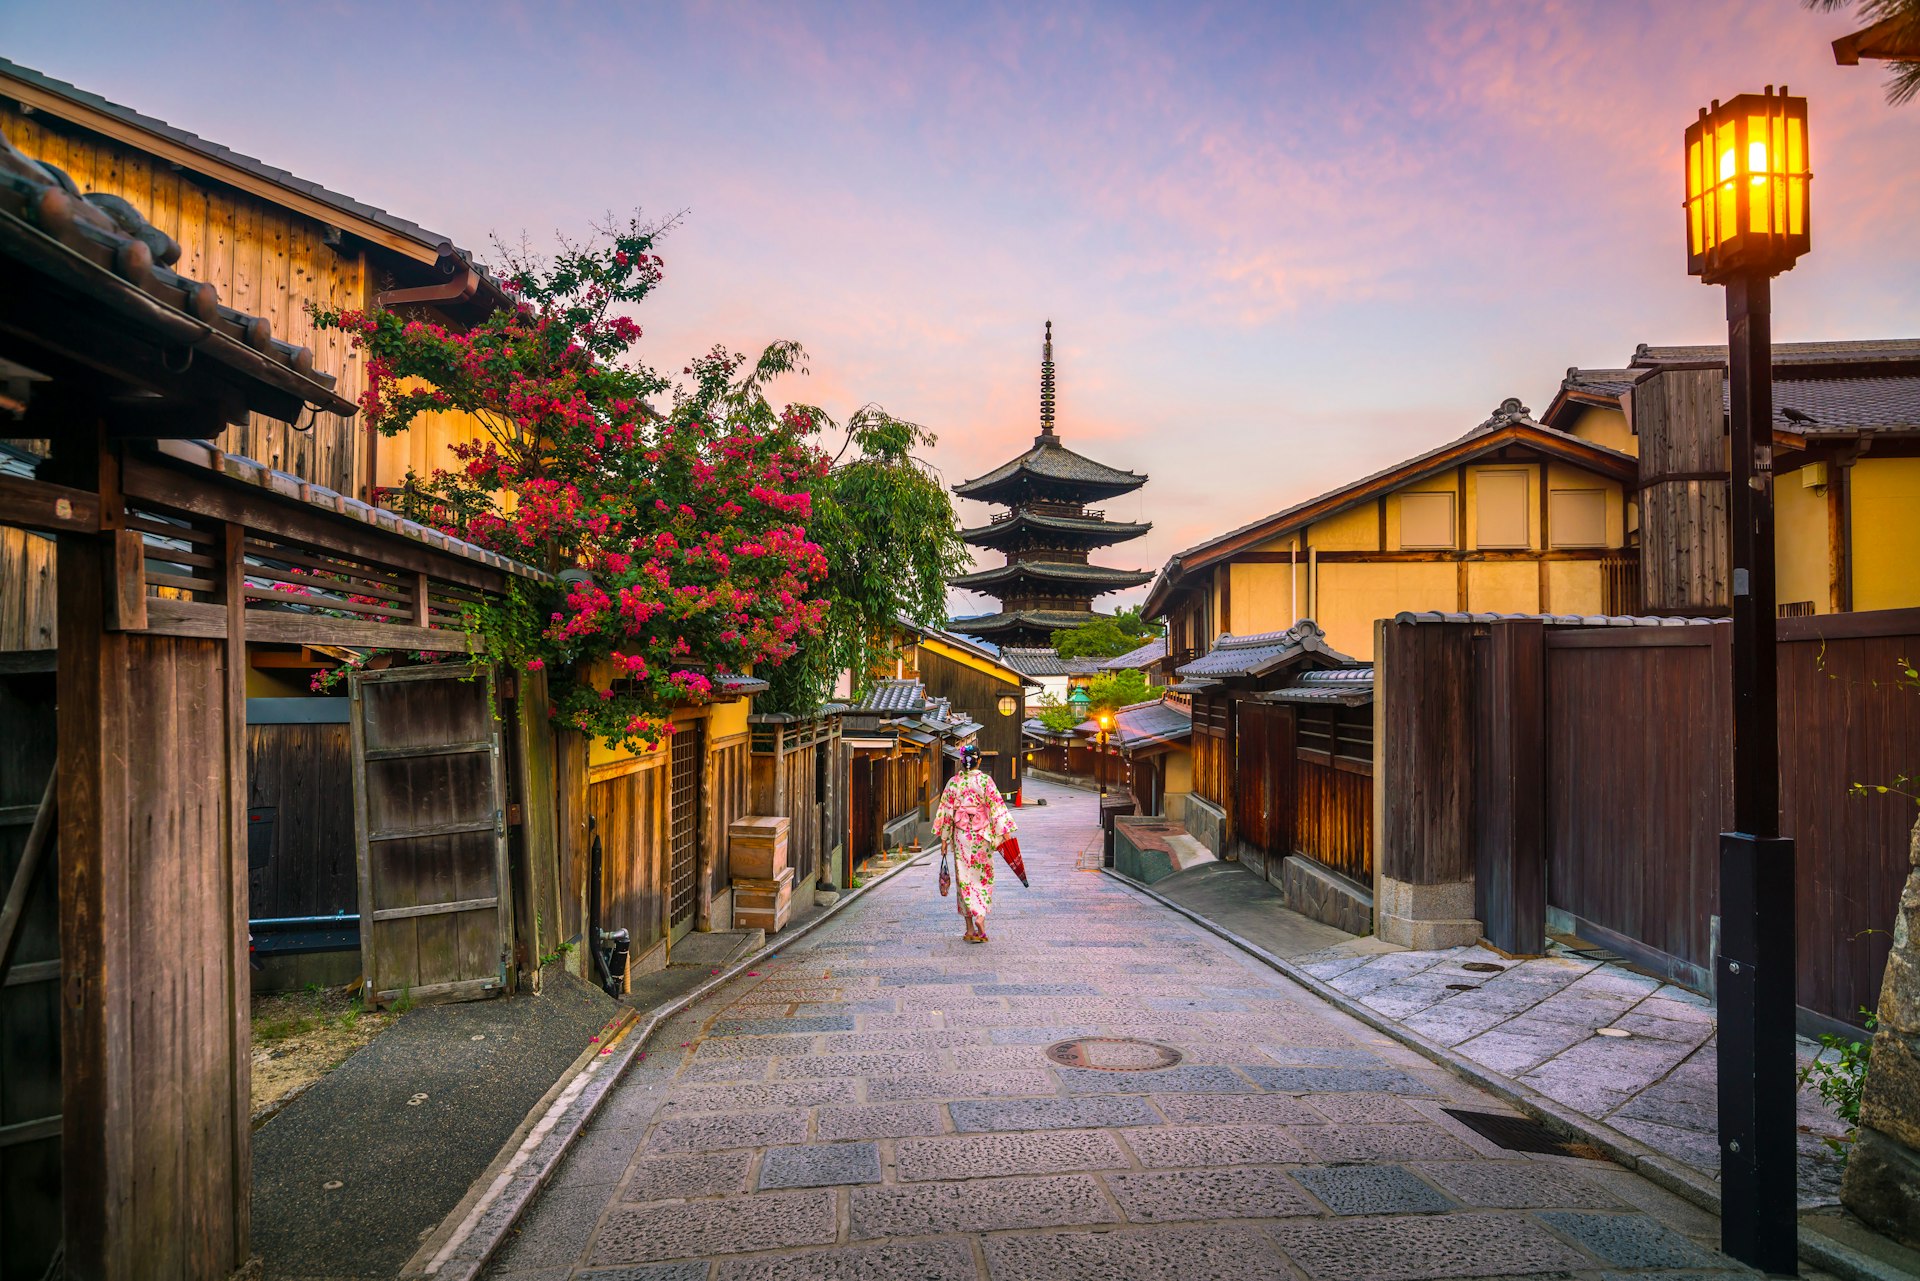 Japanese woman wearing a floral kimono walking through old town Kyoto, Japan